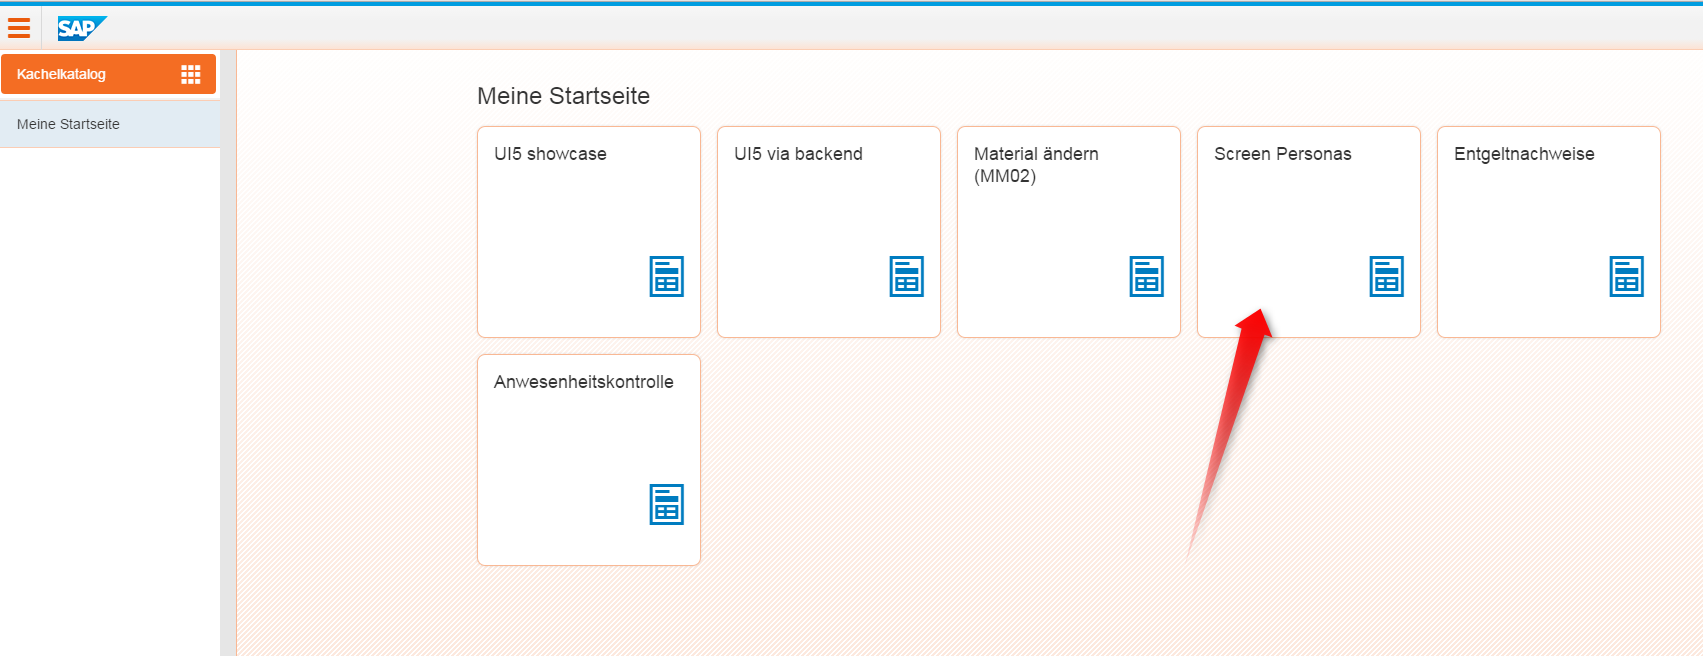 Fiori Framework Page mit SAP Screen Personas